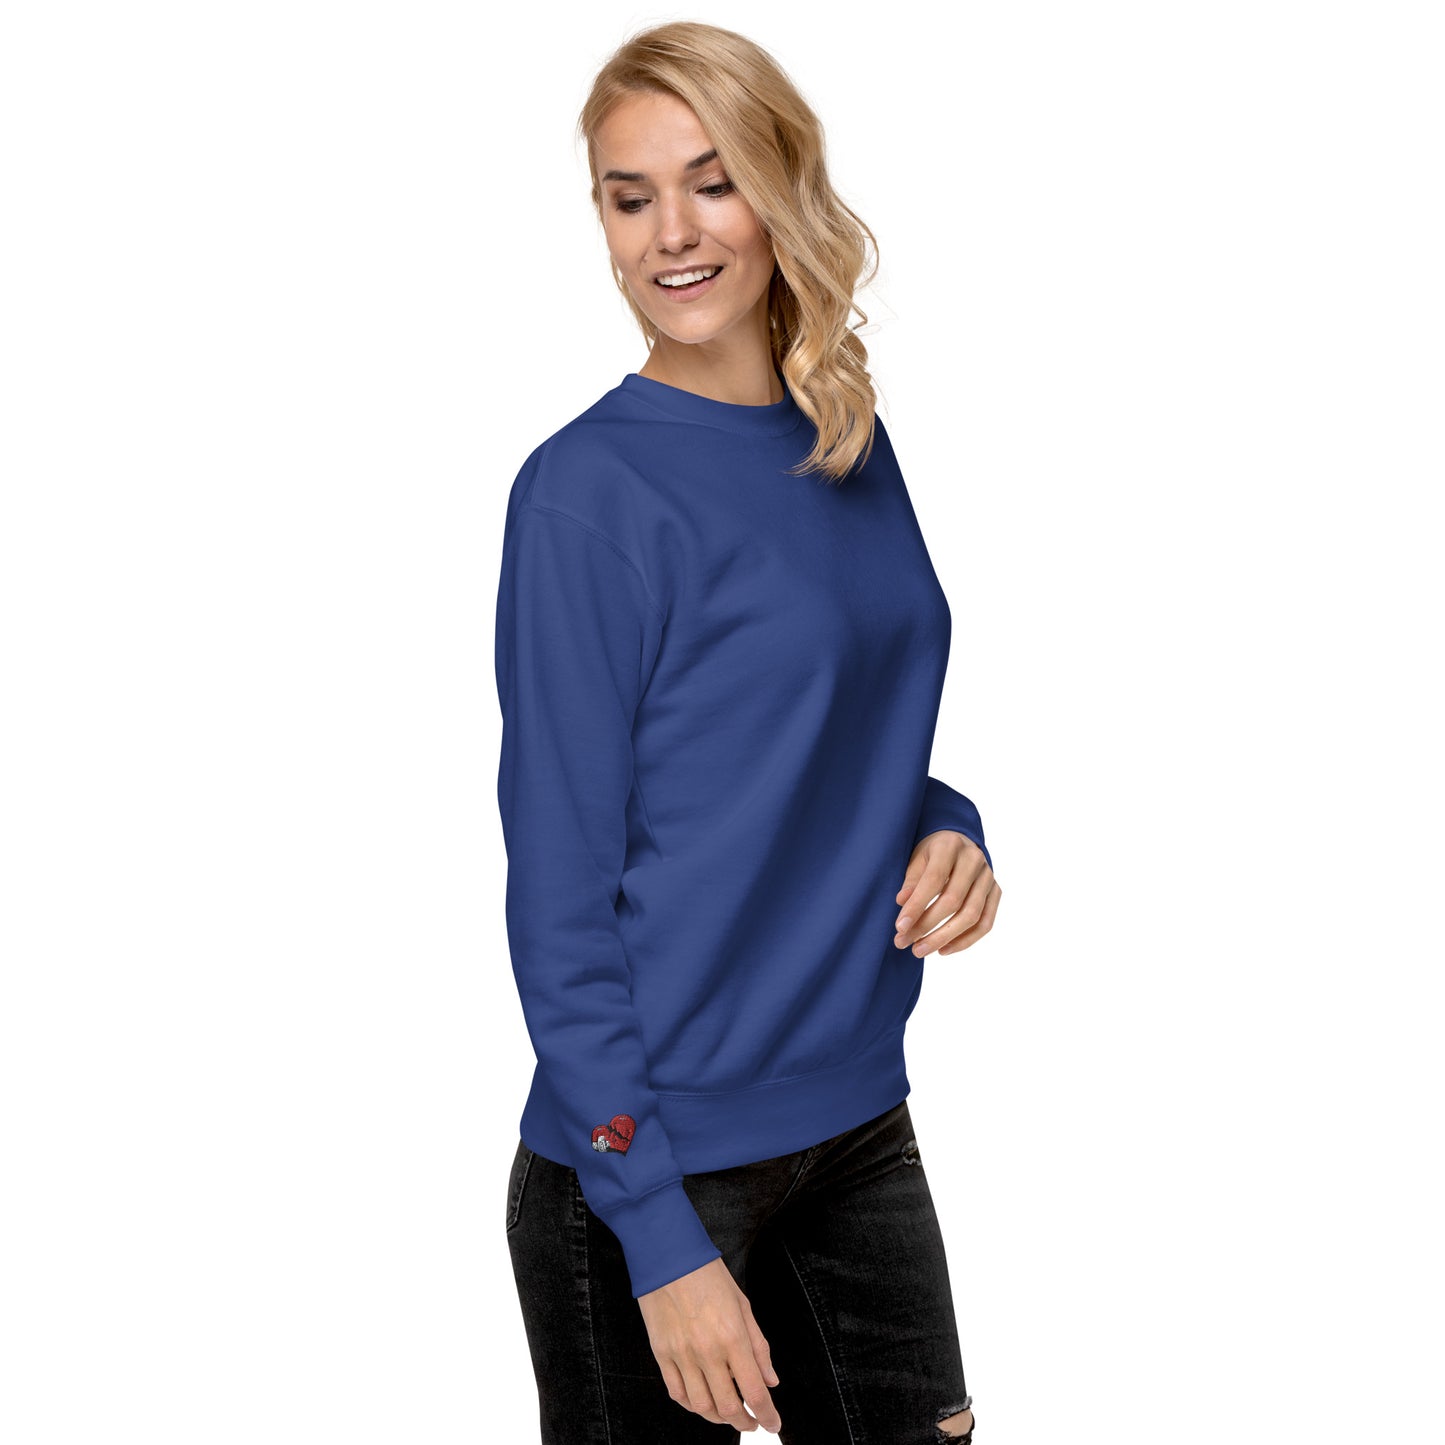 Hopstar Unisex Premium Sweatshirt